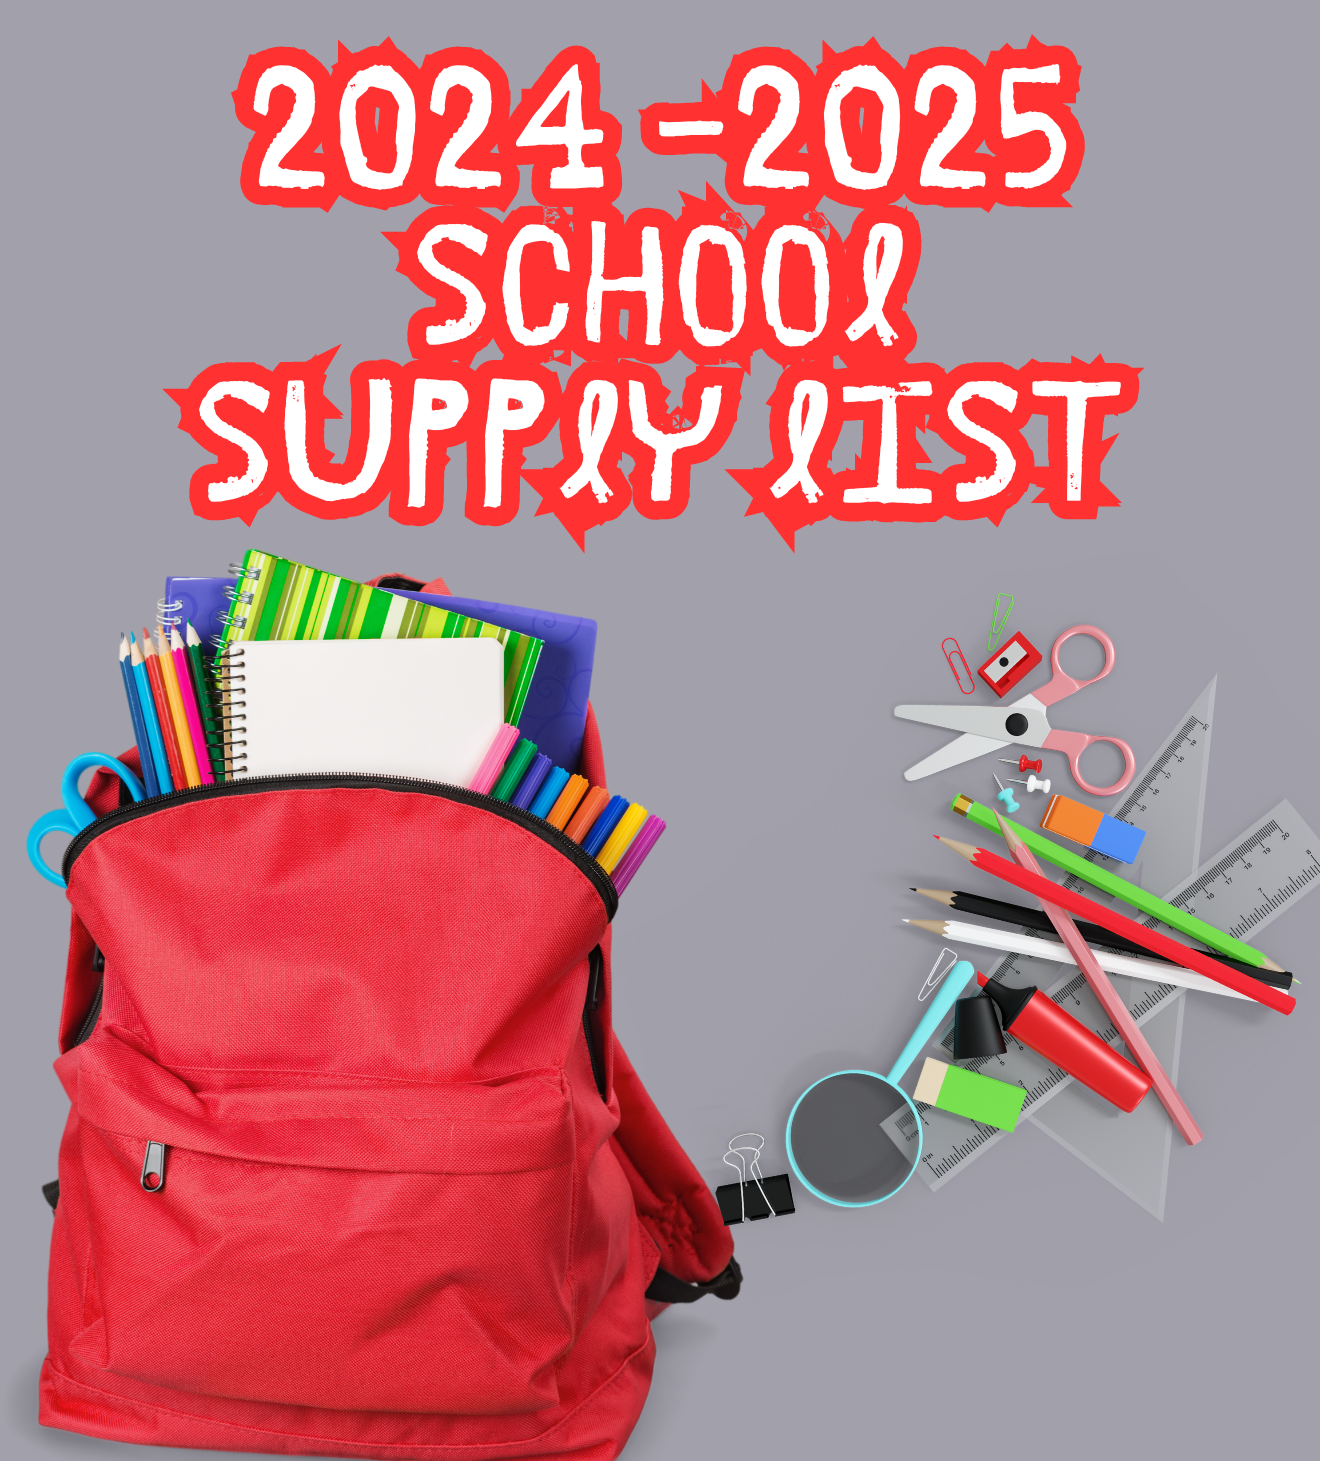 24-25 school supply list